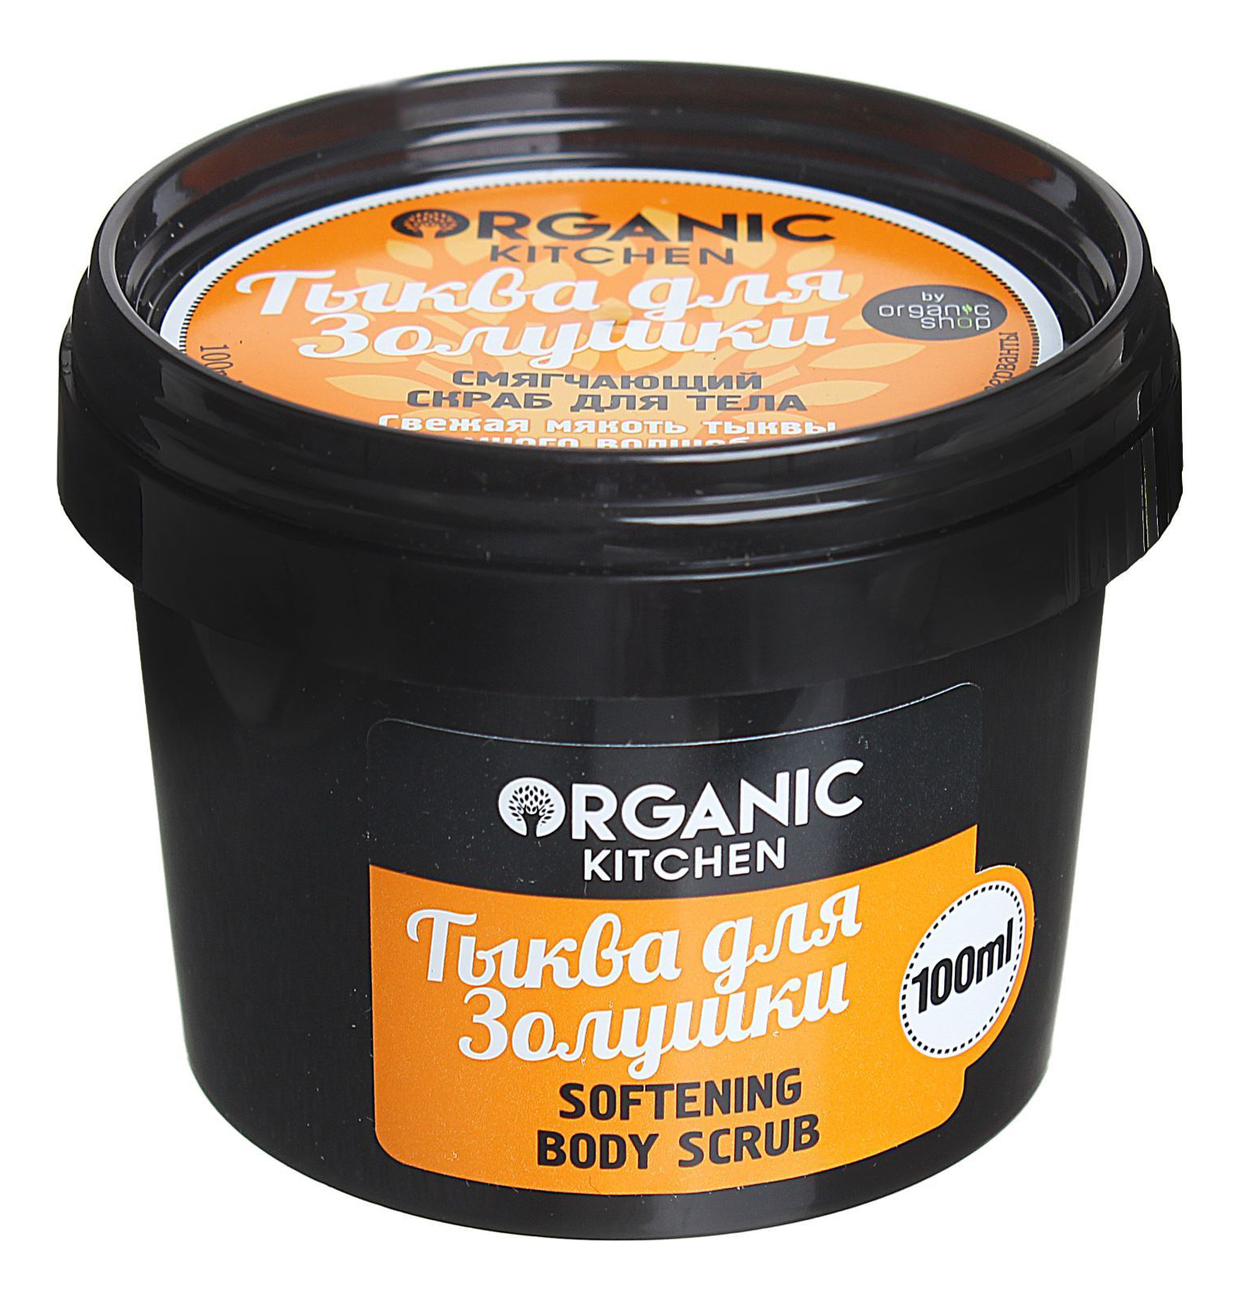 Смягчающий скраб для тела Тыква для Золушки Organic Kitchen Softening Body Scrub 100мл